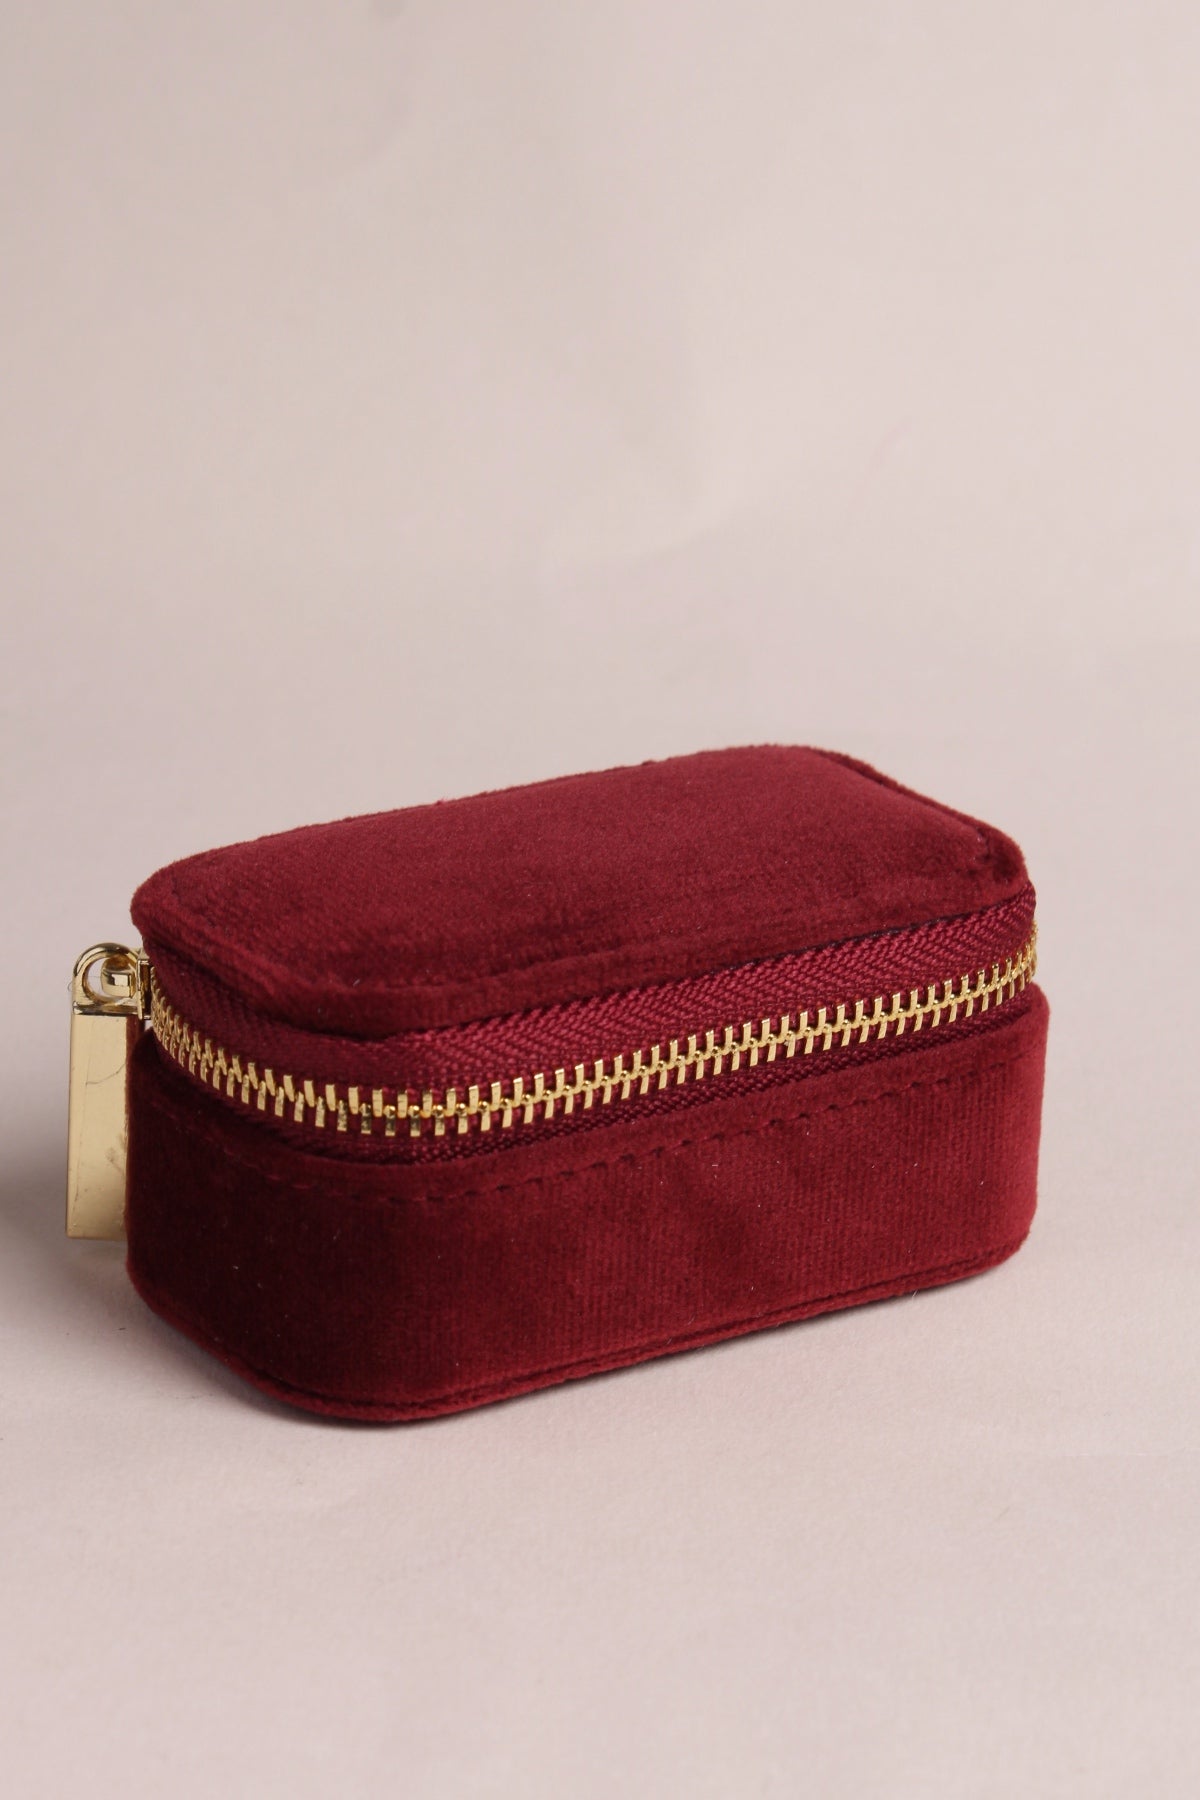 La Mini Boîte à Bijoux - Morello cherry red - waekura